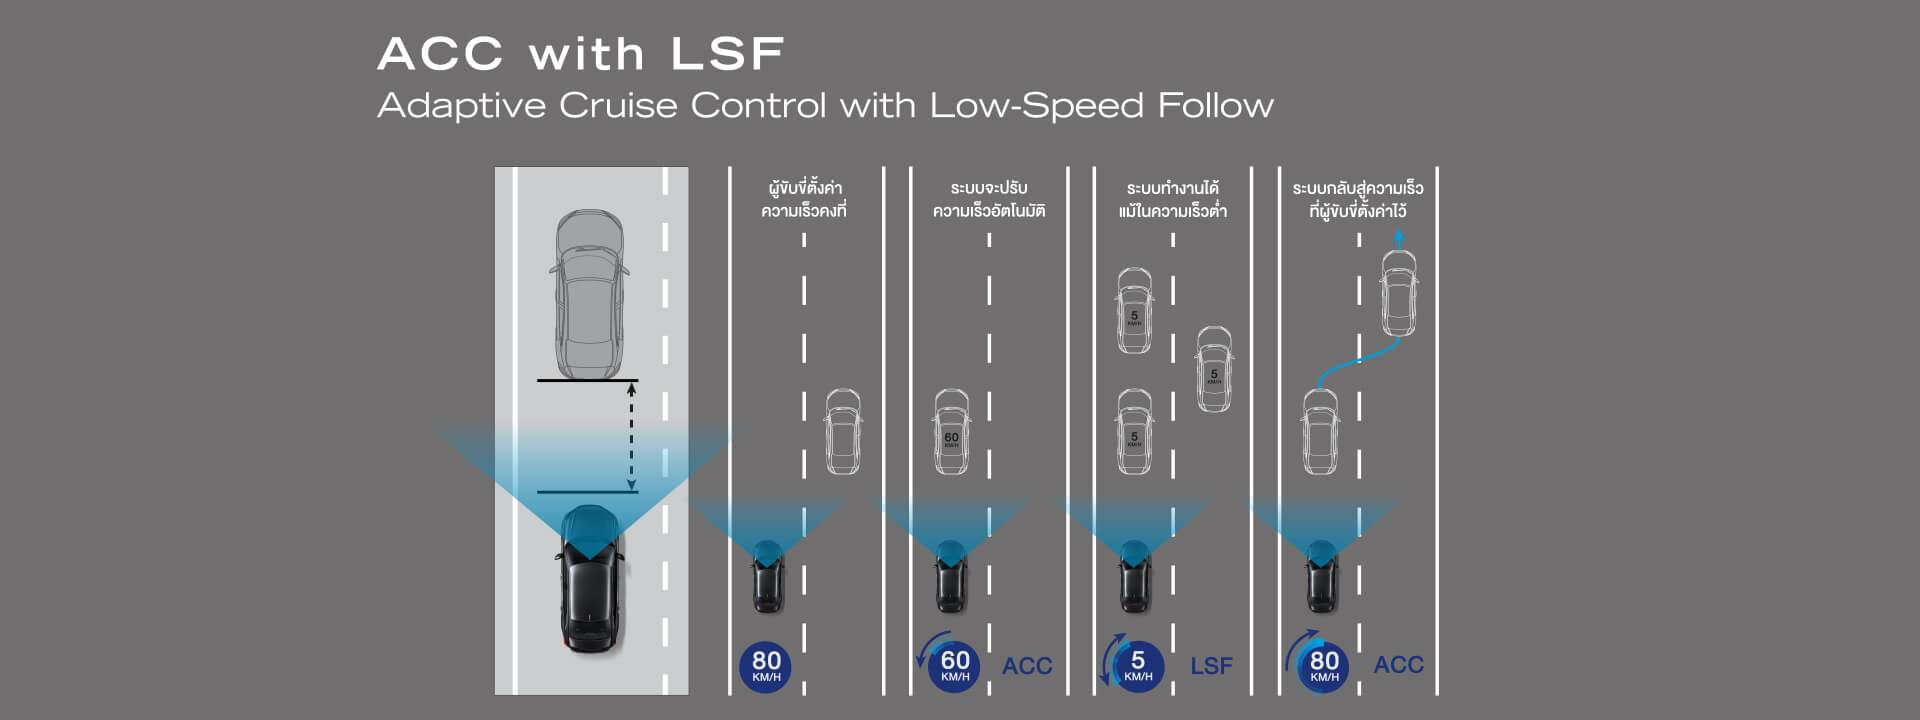 Adaptive Cruise Control with Low-Speed Follow (ACC with LSF) ระบบควบคุมความเร็วอัตโนมัติแบบแปรผัน พร้อมระบบปรับความเร็วตามรถยนต์คันหน้าที่ความเร็วต่ำ